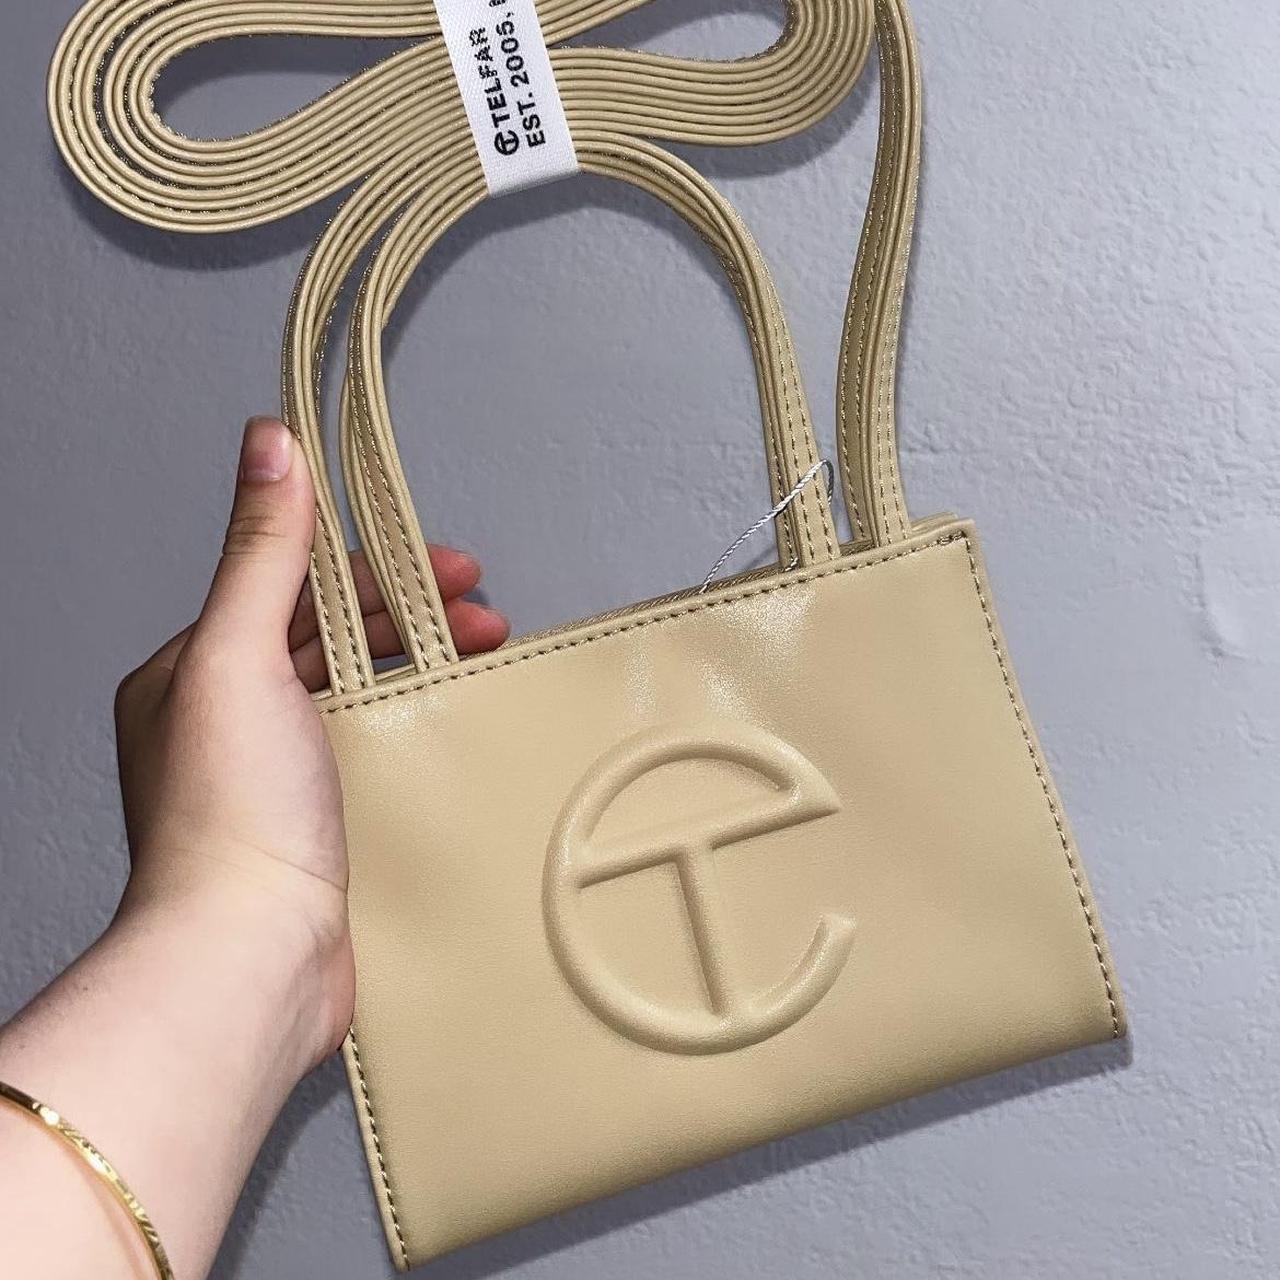 Authenticated Telfar Handbags for Women